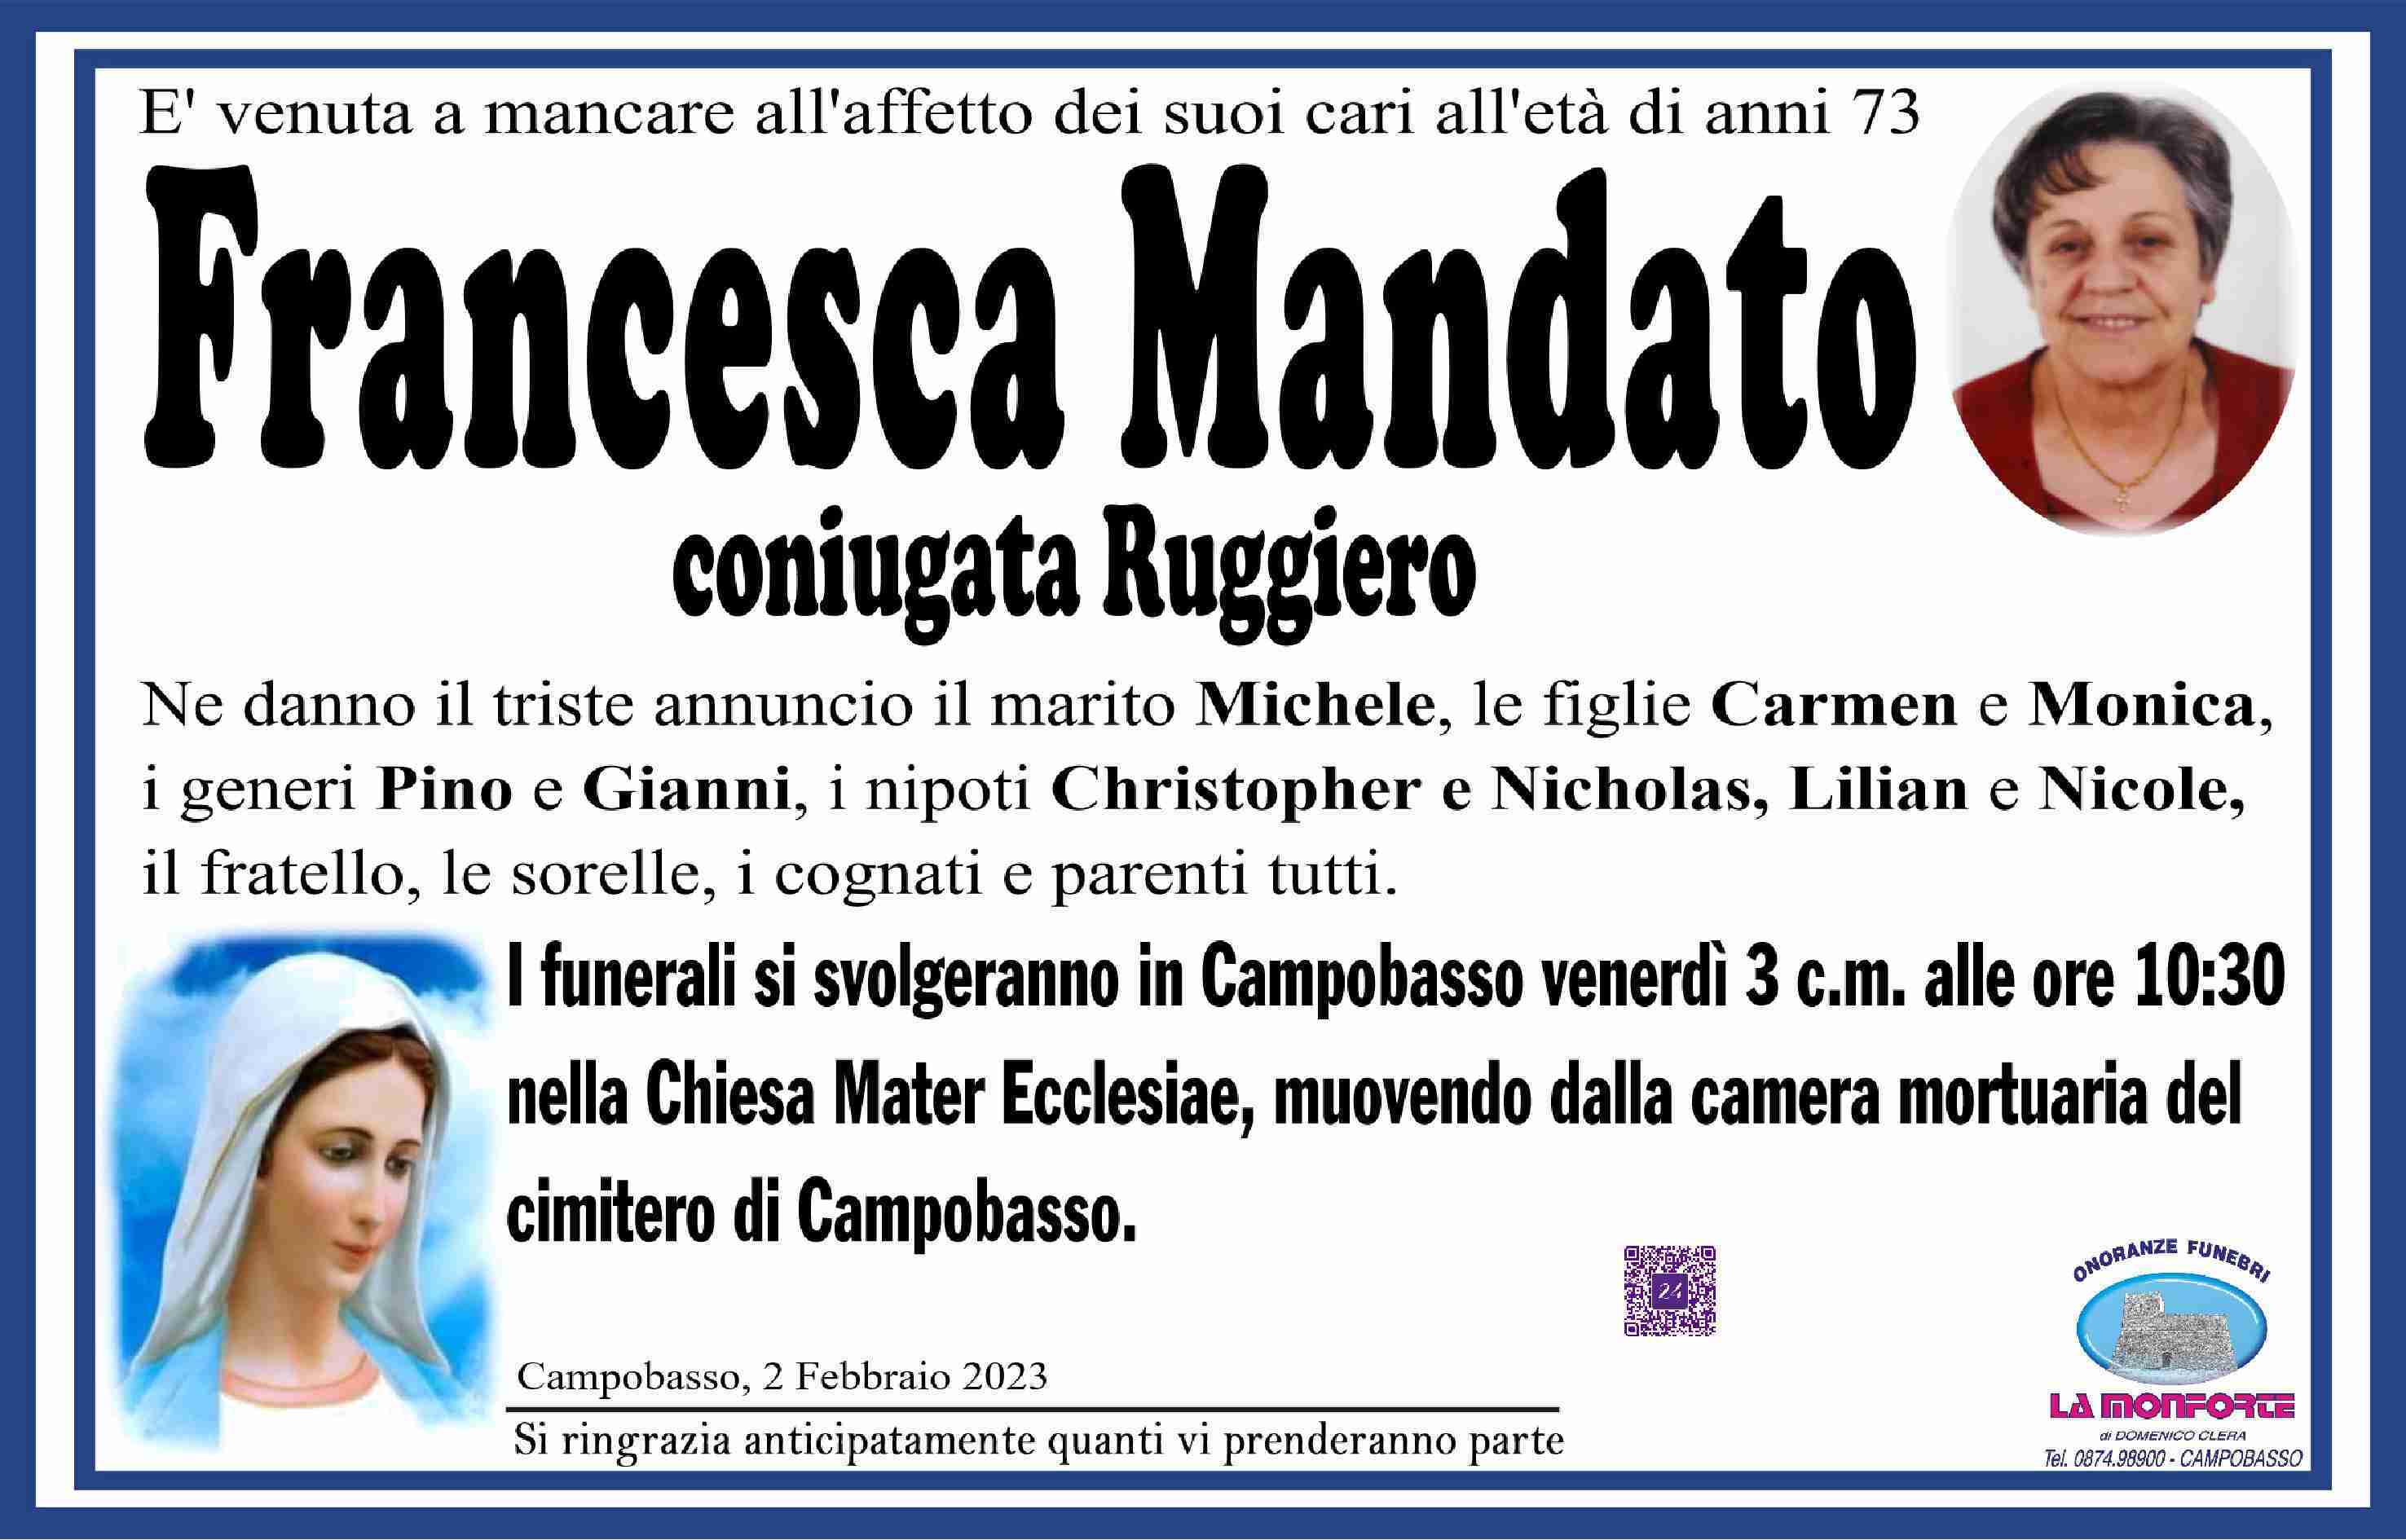 Francesca Mandato